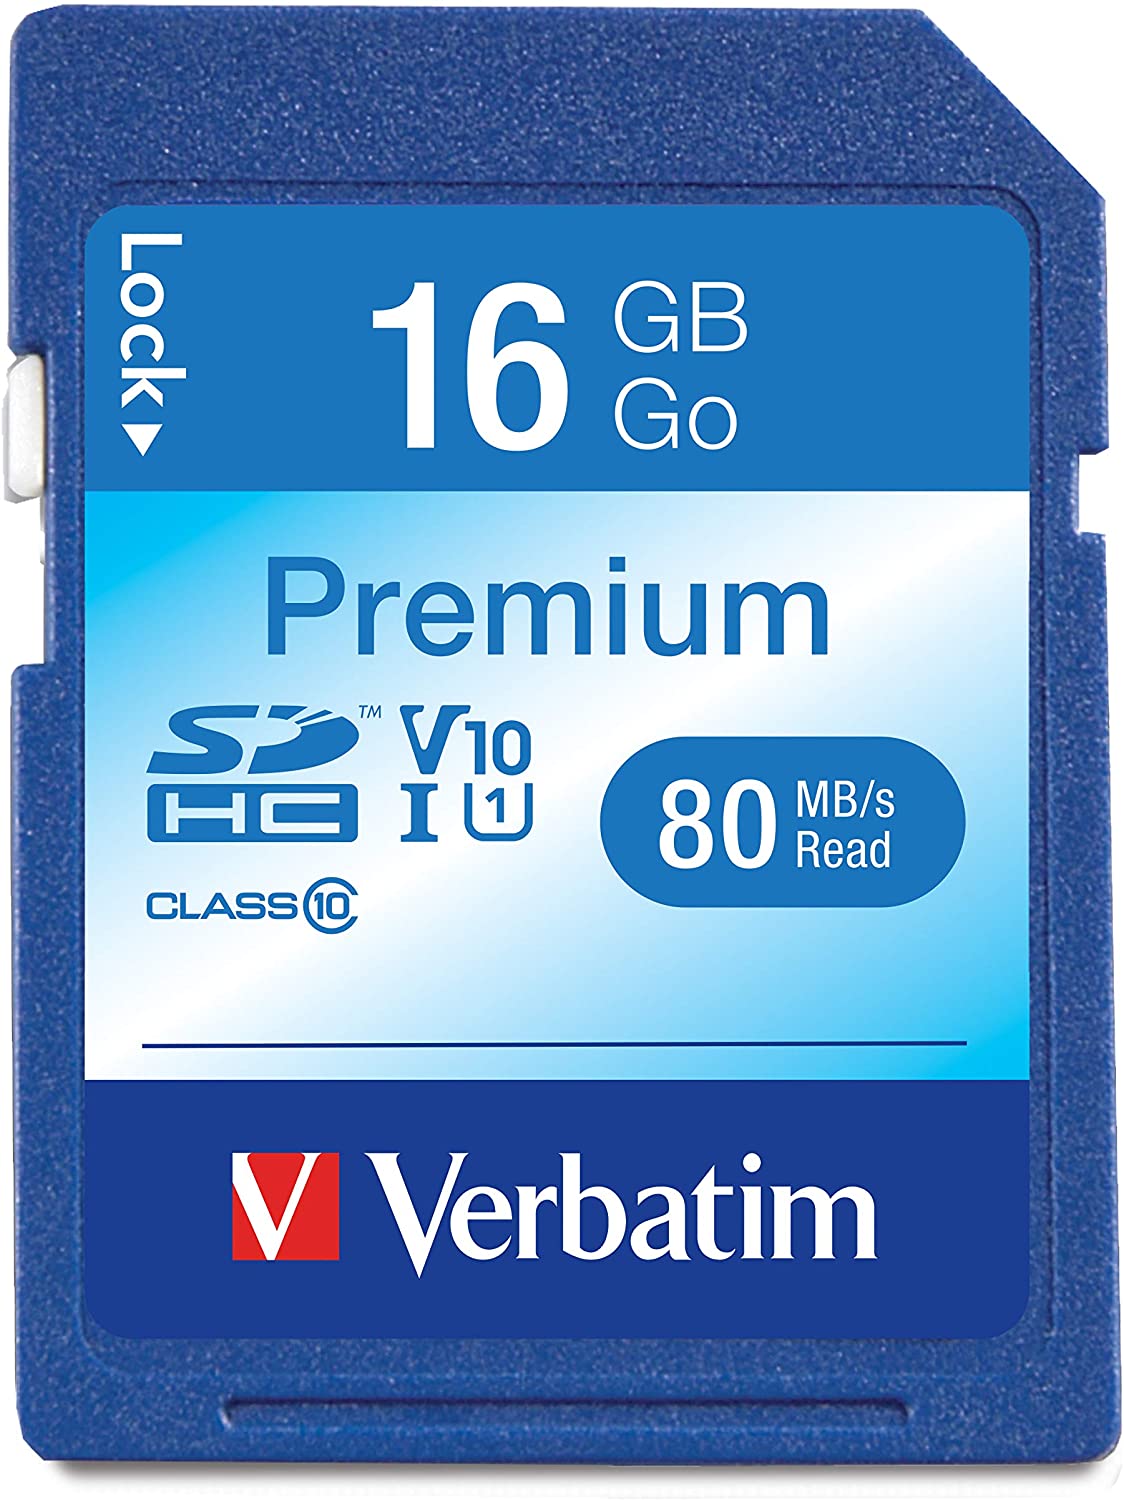 Verbatim 16GB Premium SDHC Memory Card, UHS-I V10 U1 Class 10, blue 16 GB